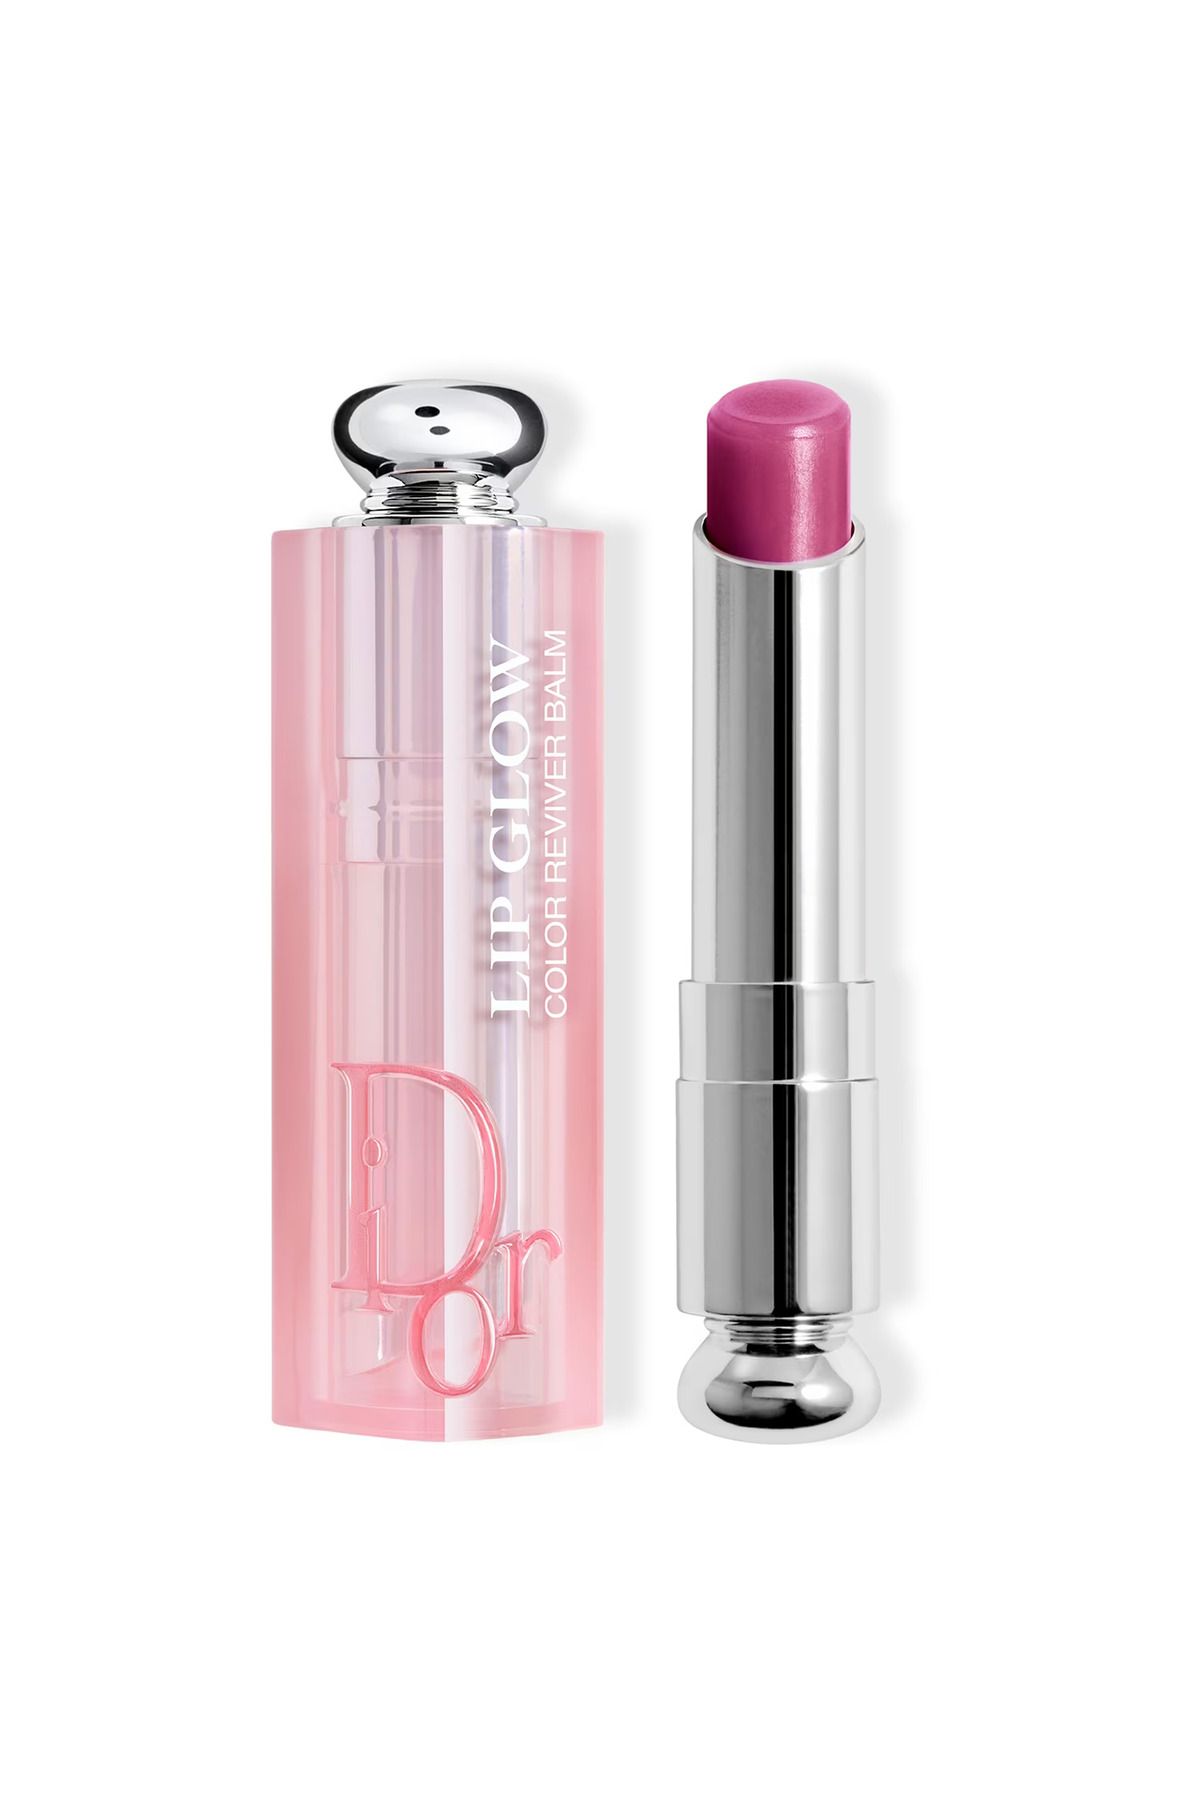 Dior - Dudak Balmı - Dior Addict Lip Glow - 006 Berry (3,2 g)